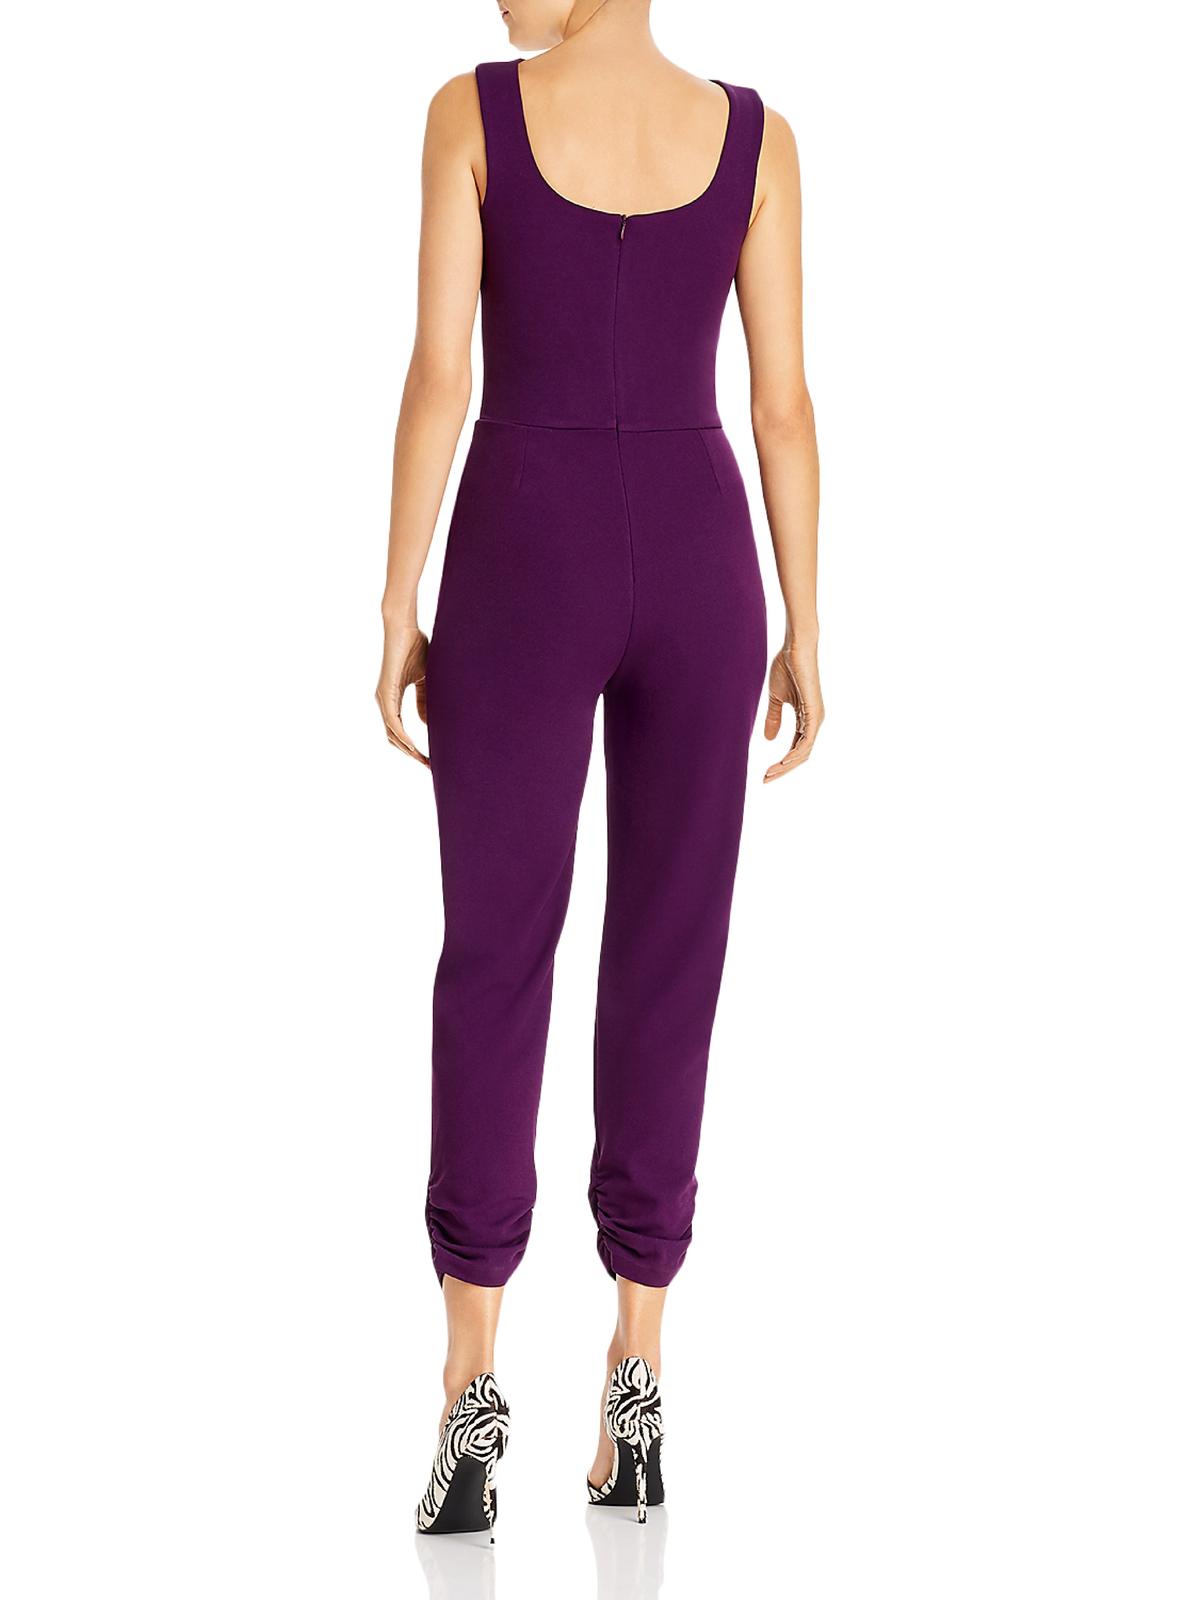 AQUA Womens Purple Spaghetti Strap Tank Straight leg Jumpsuit Size: XS - image 2 of 2